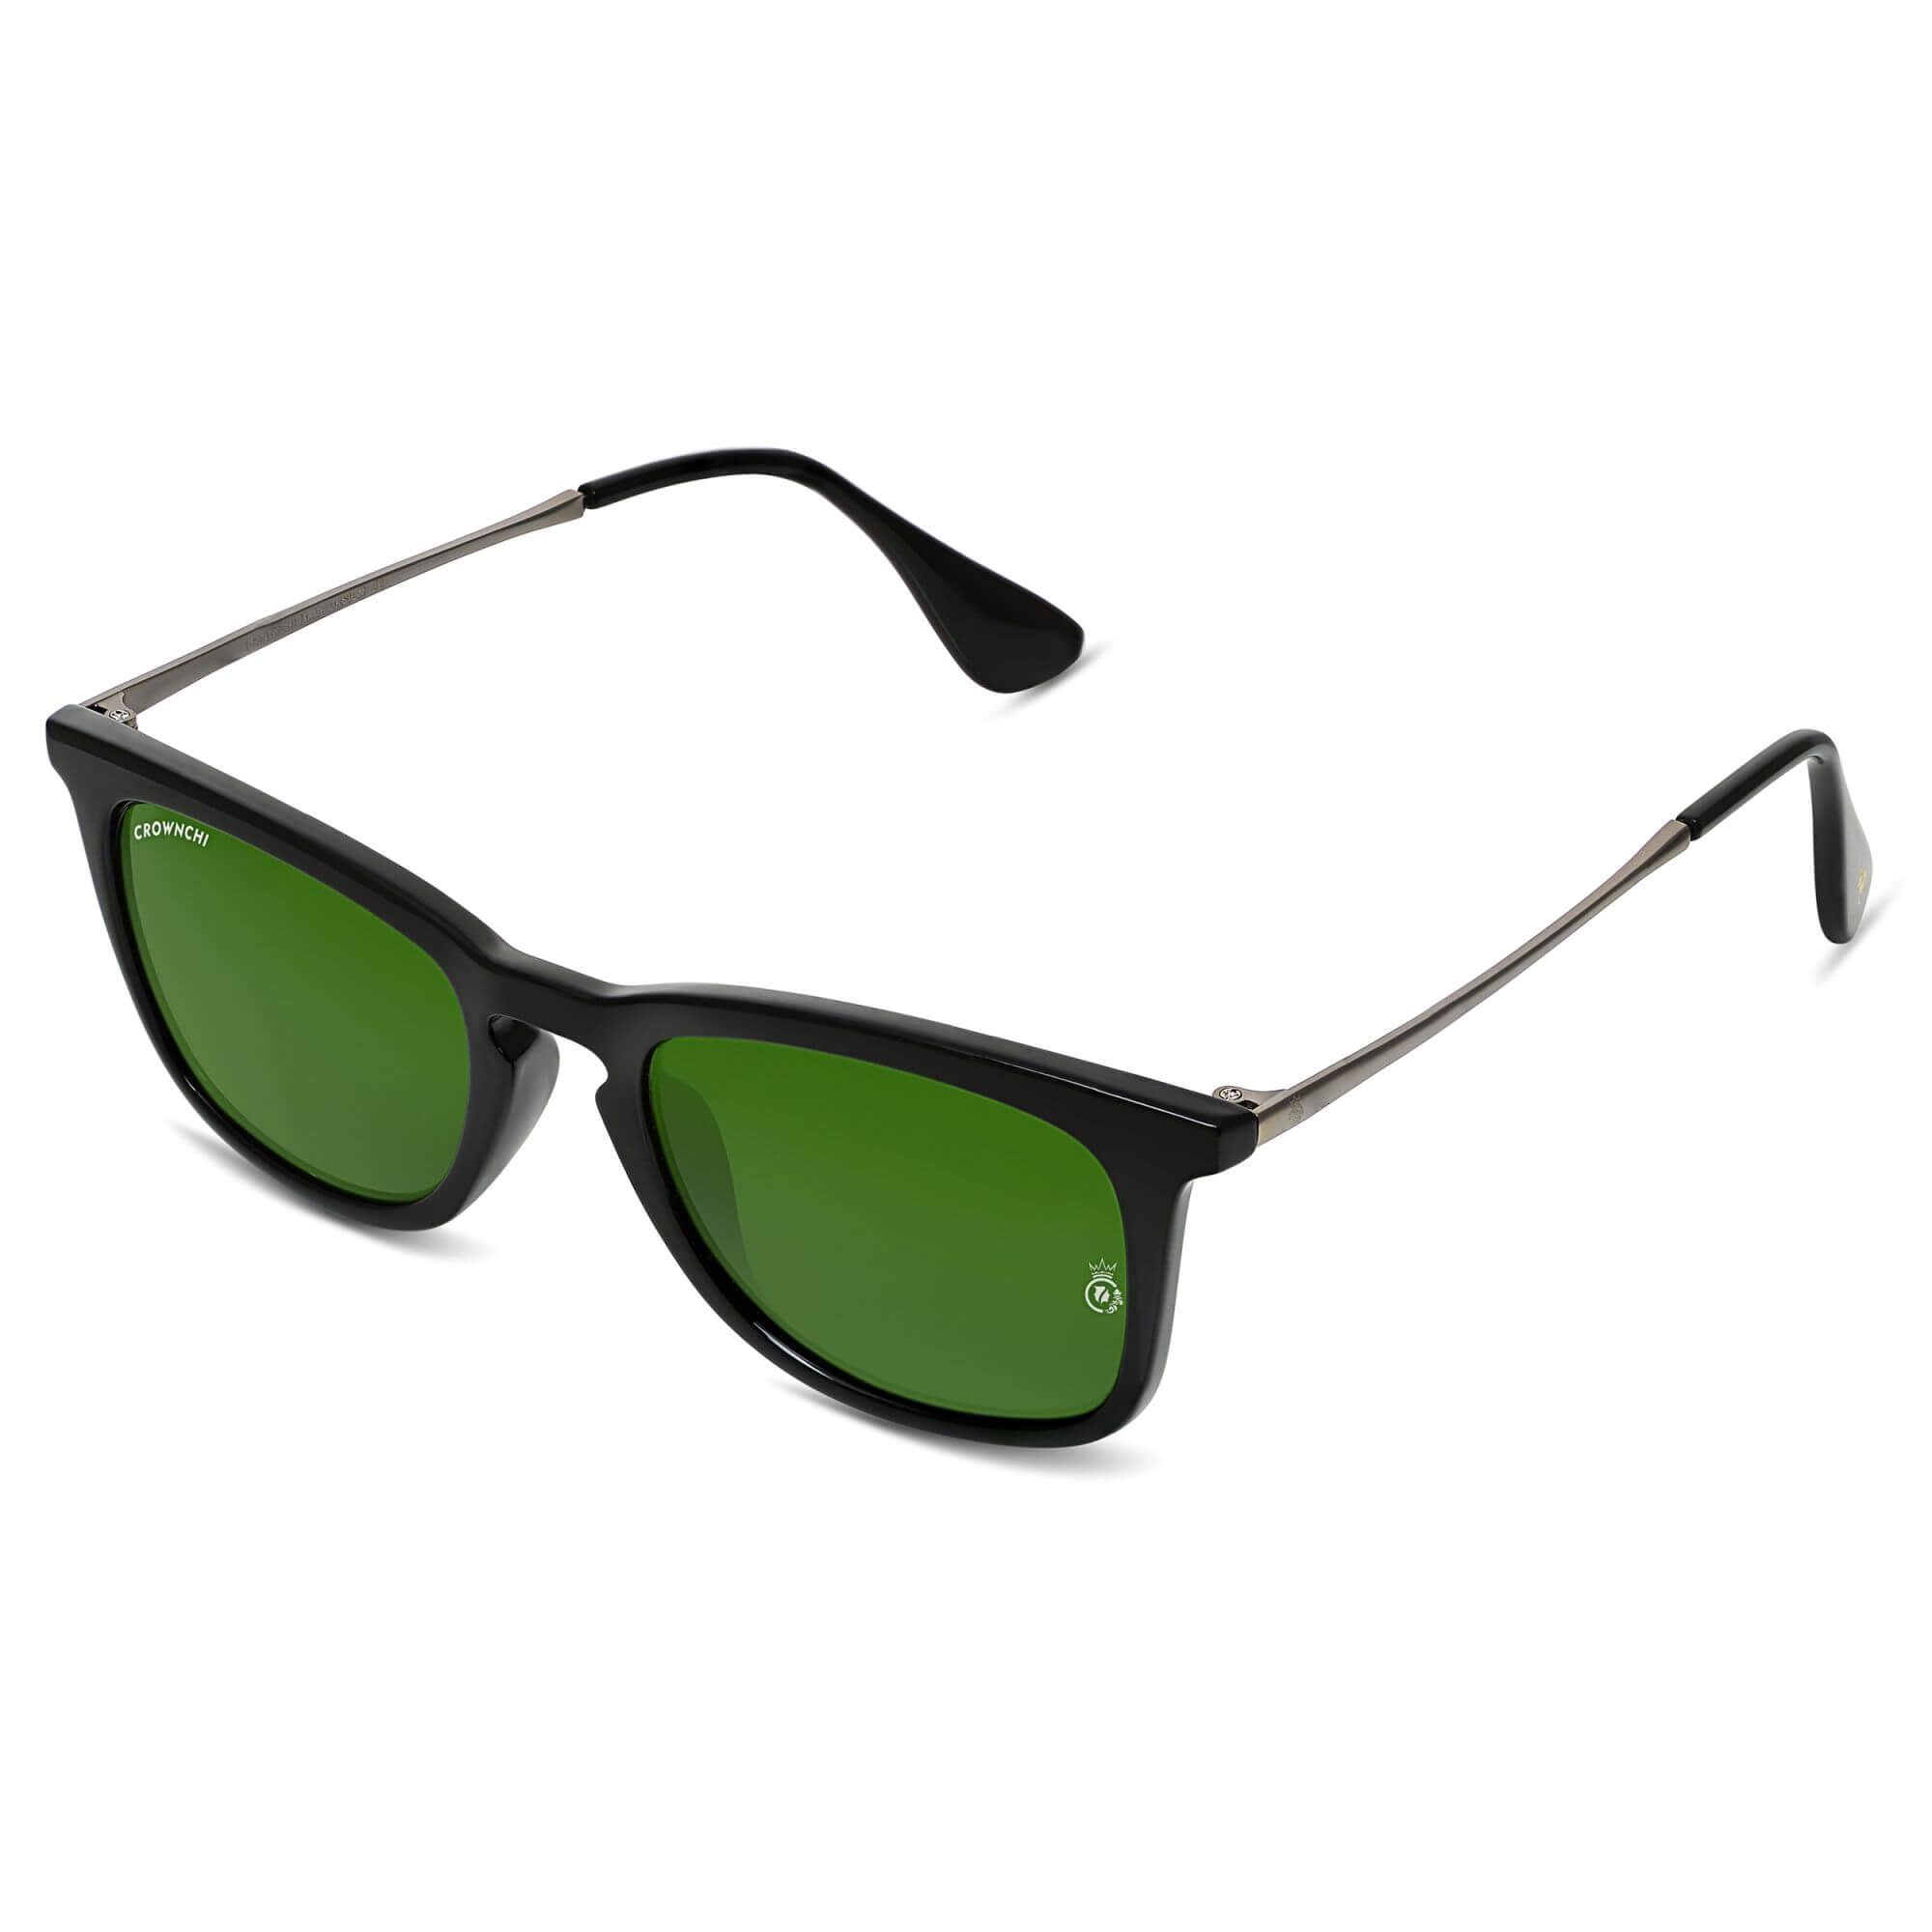 Sparrow Black Green Square Edition Sunglasses